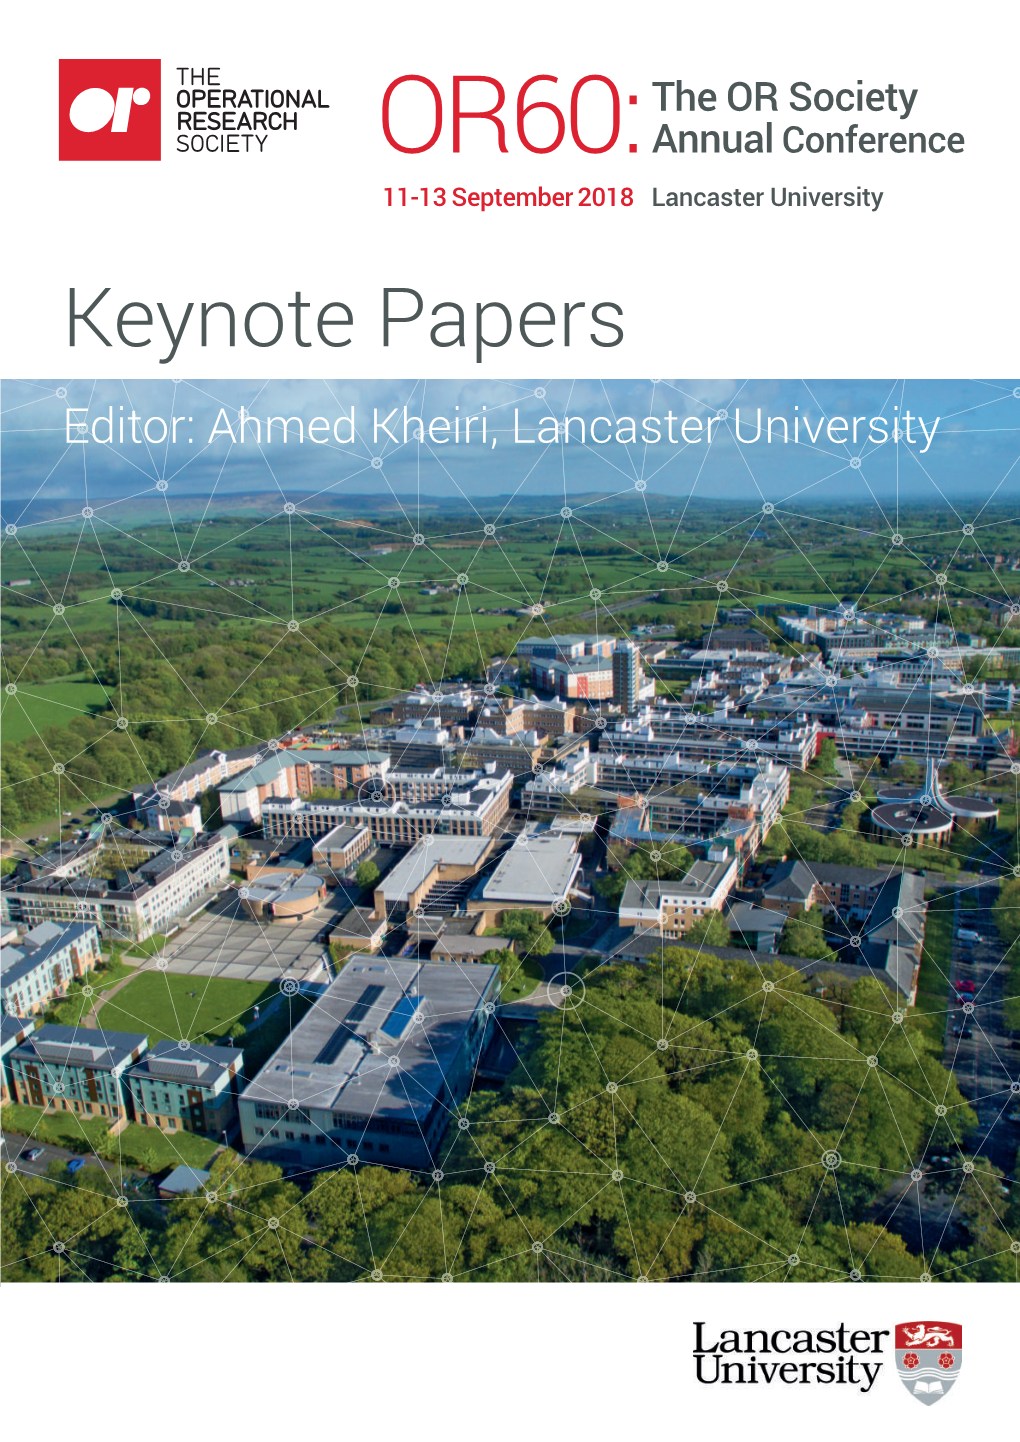 Keynote Papers Editor: Ahmed Kheiri, Lancaster University